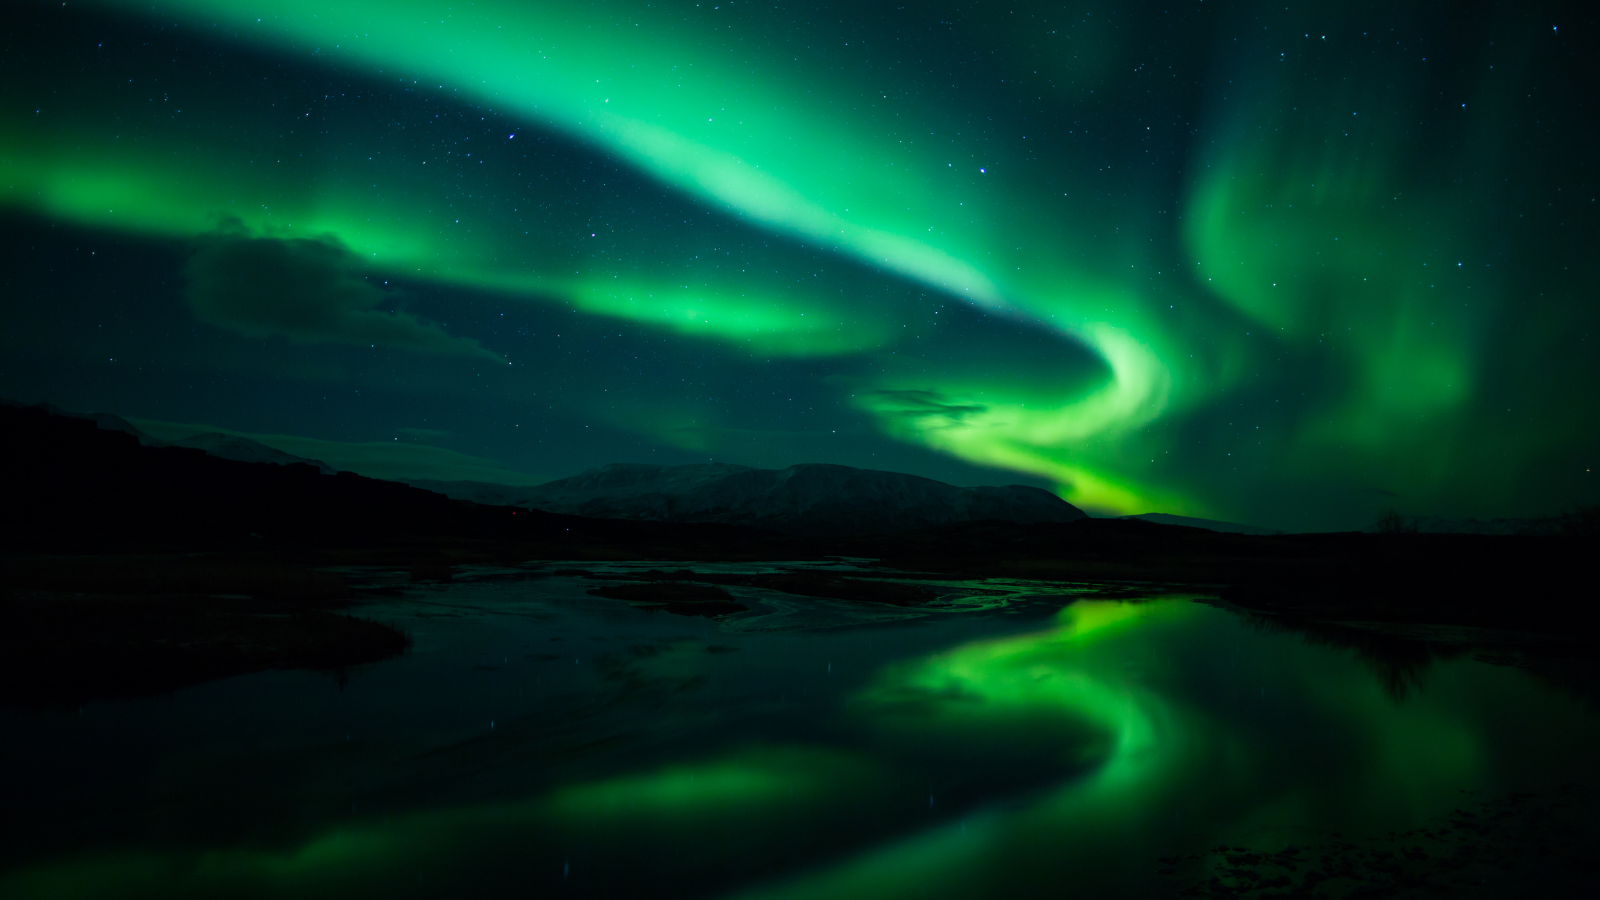 Green aurora borealis over mountain landscape in Iceland.